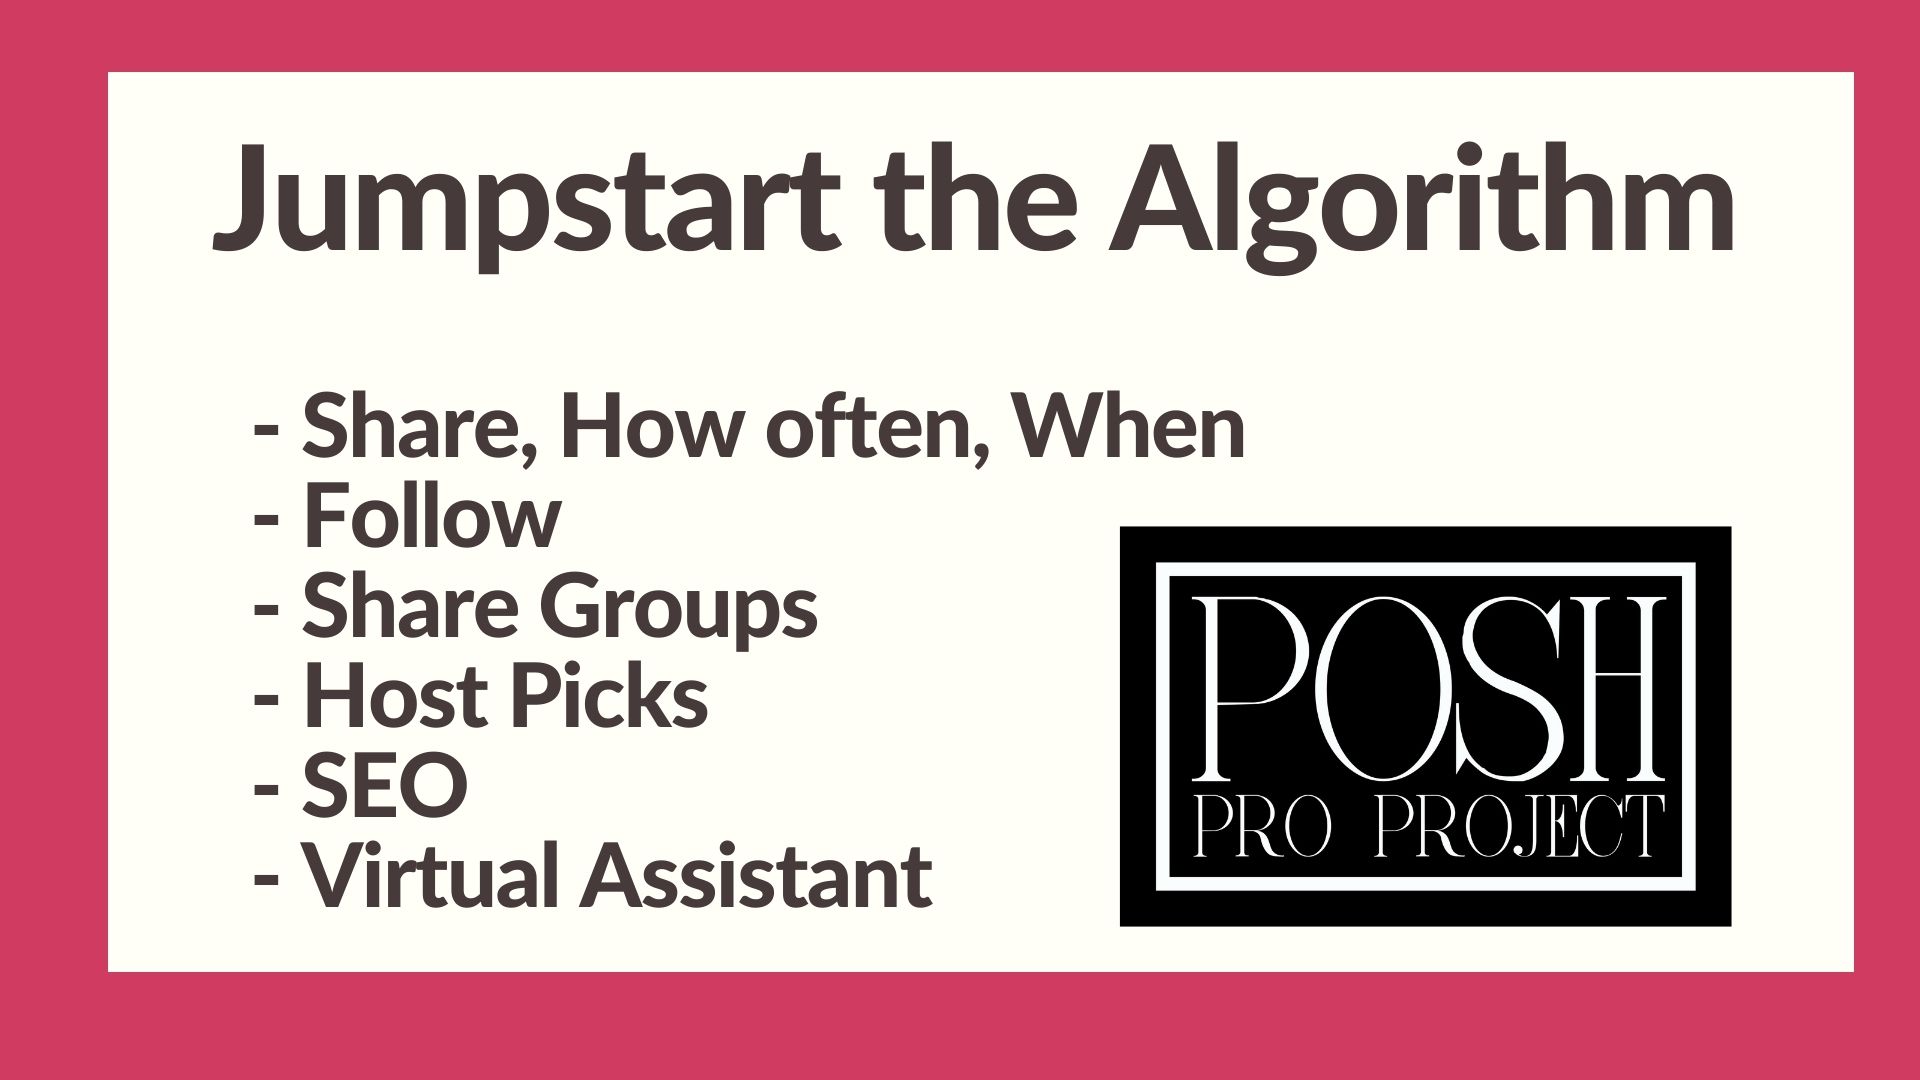 Jumpstart the Algorithm checklist